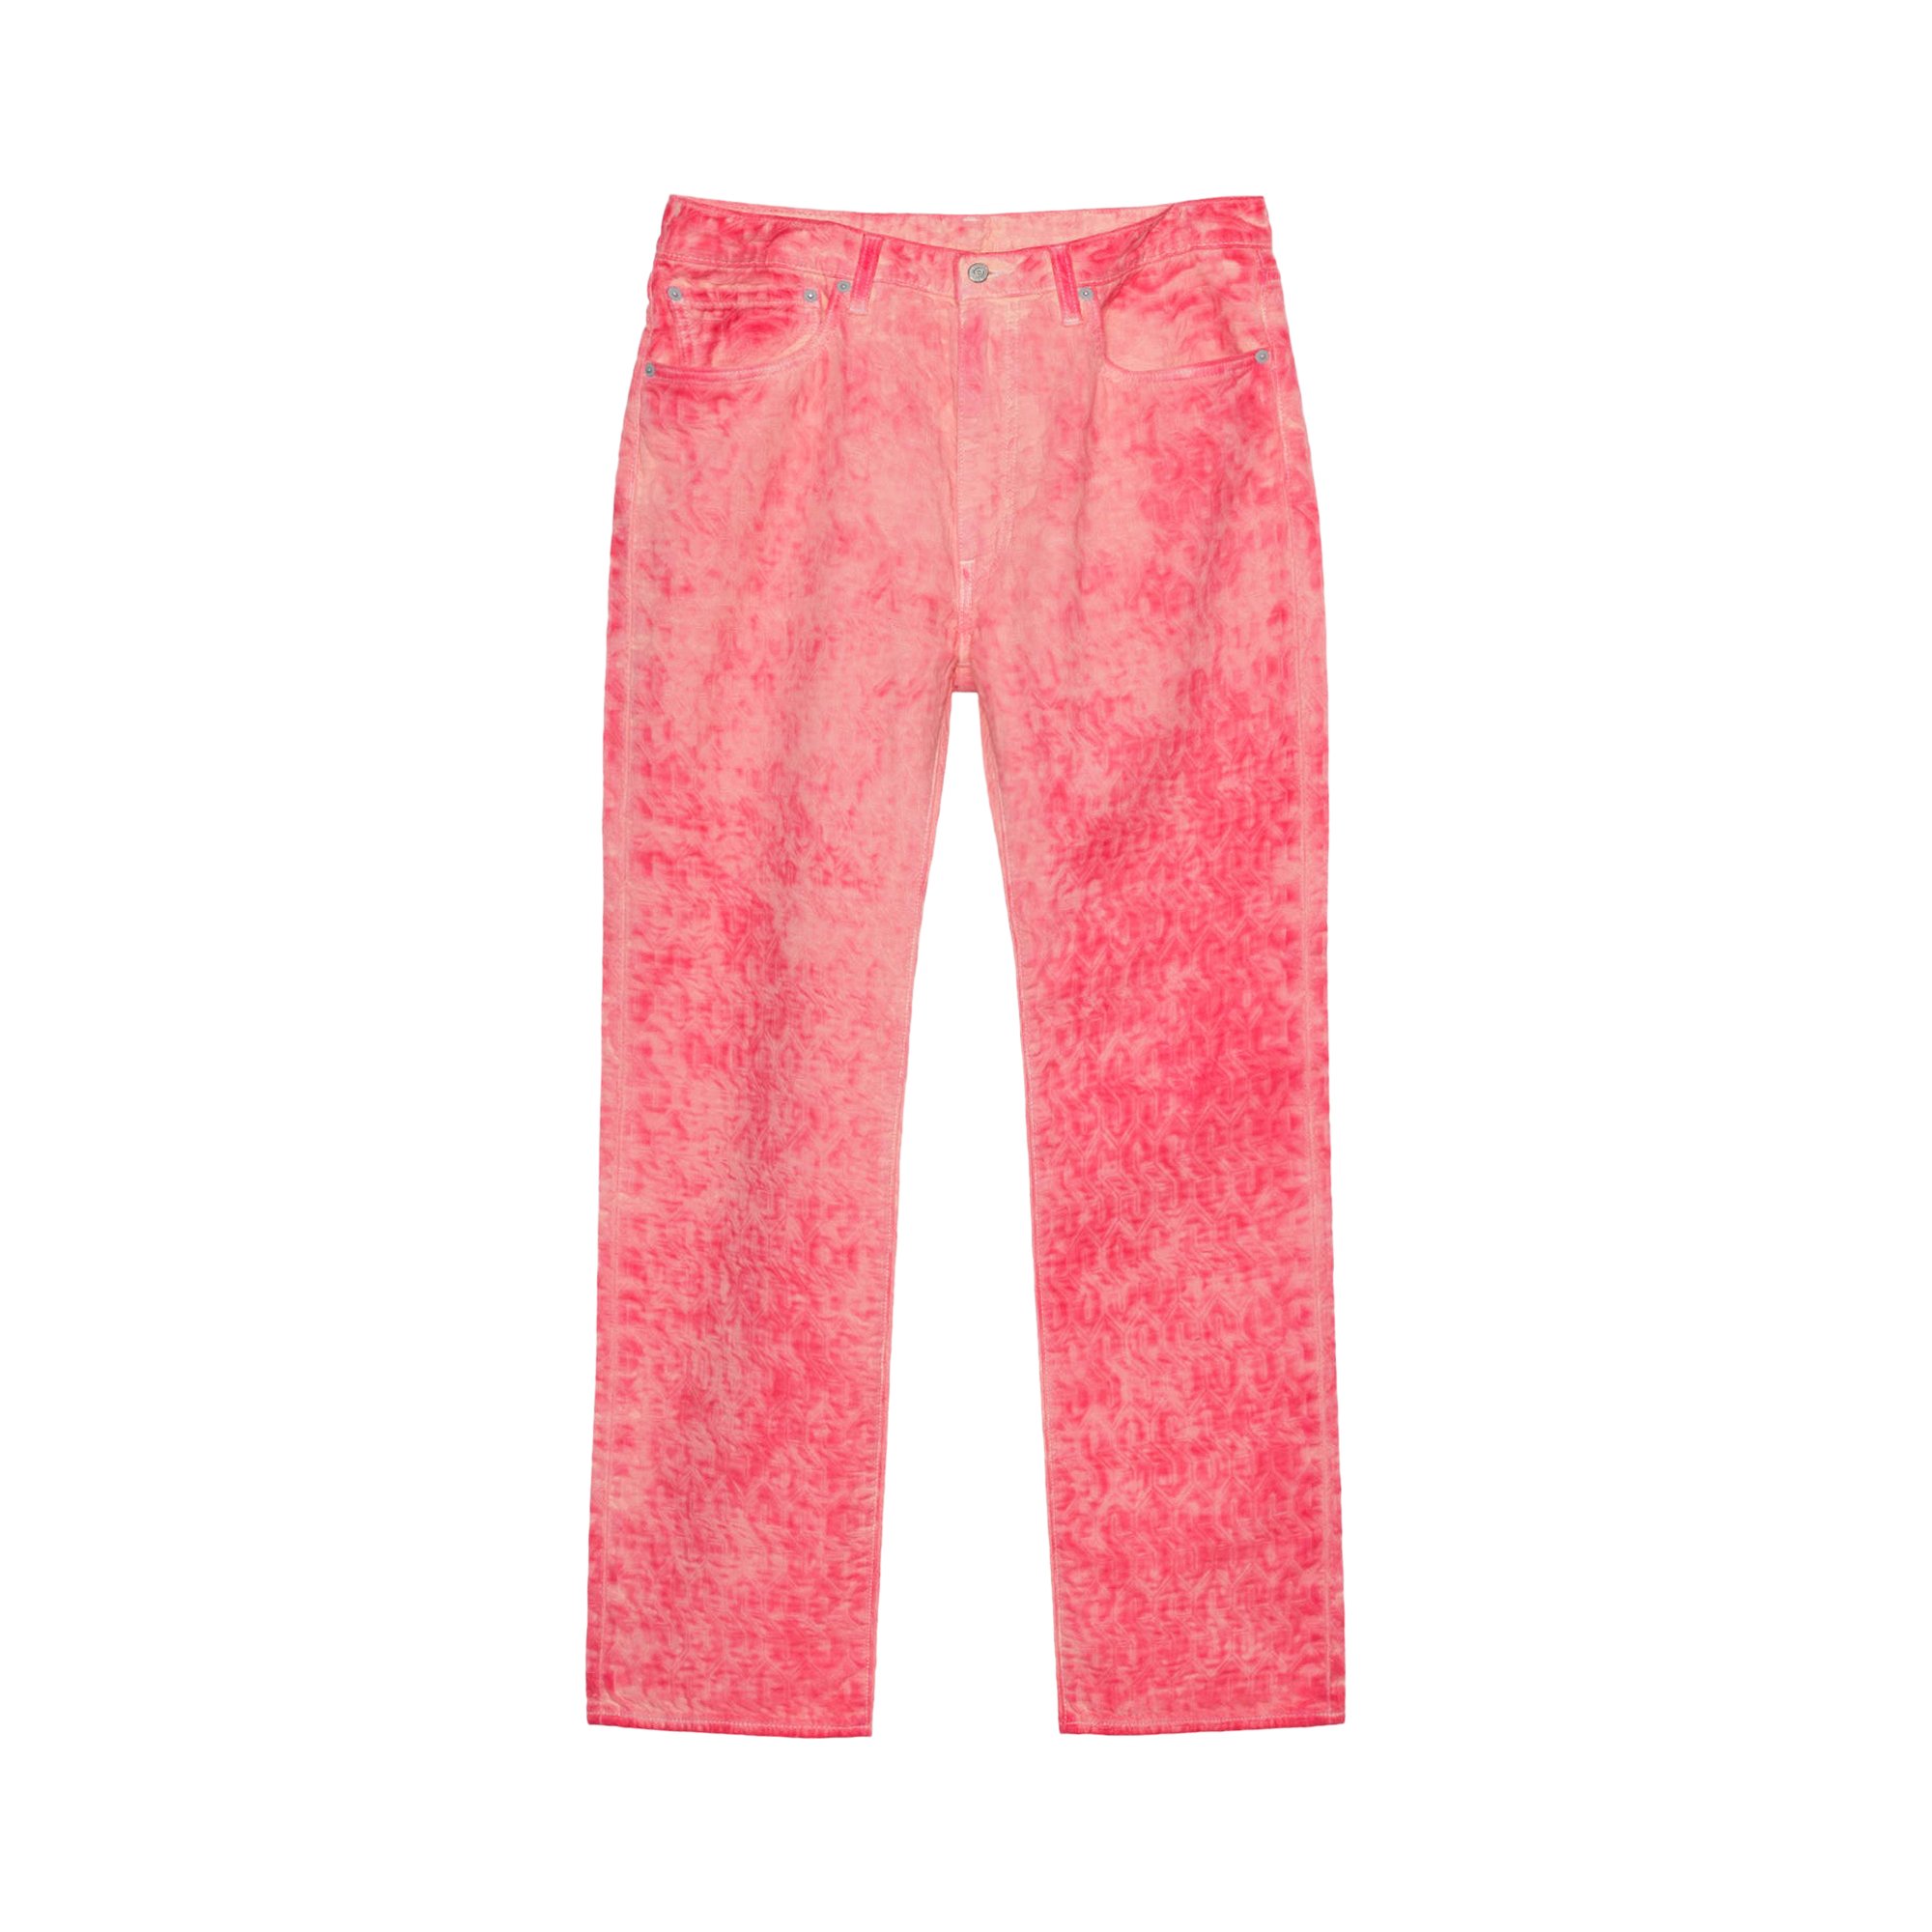 Buy Levi's x Stussy Dyed Jacquard Jean 'Pink' - A52190000 | GOAT